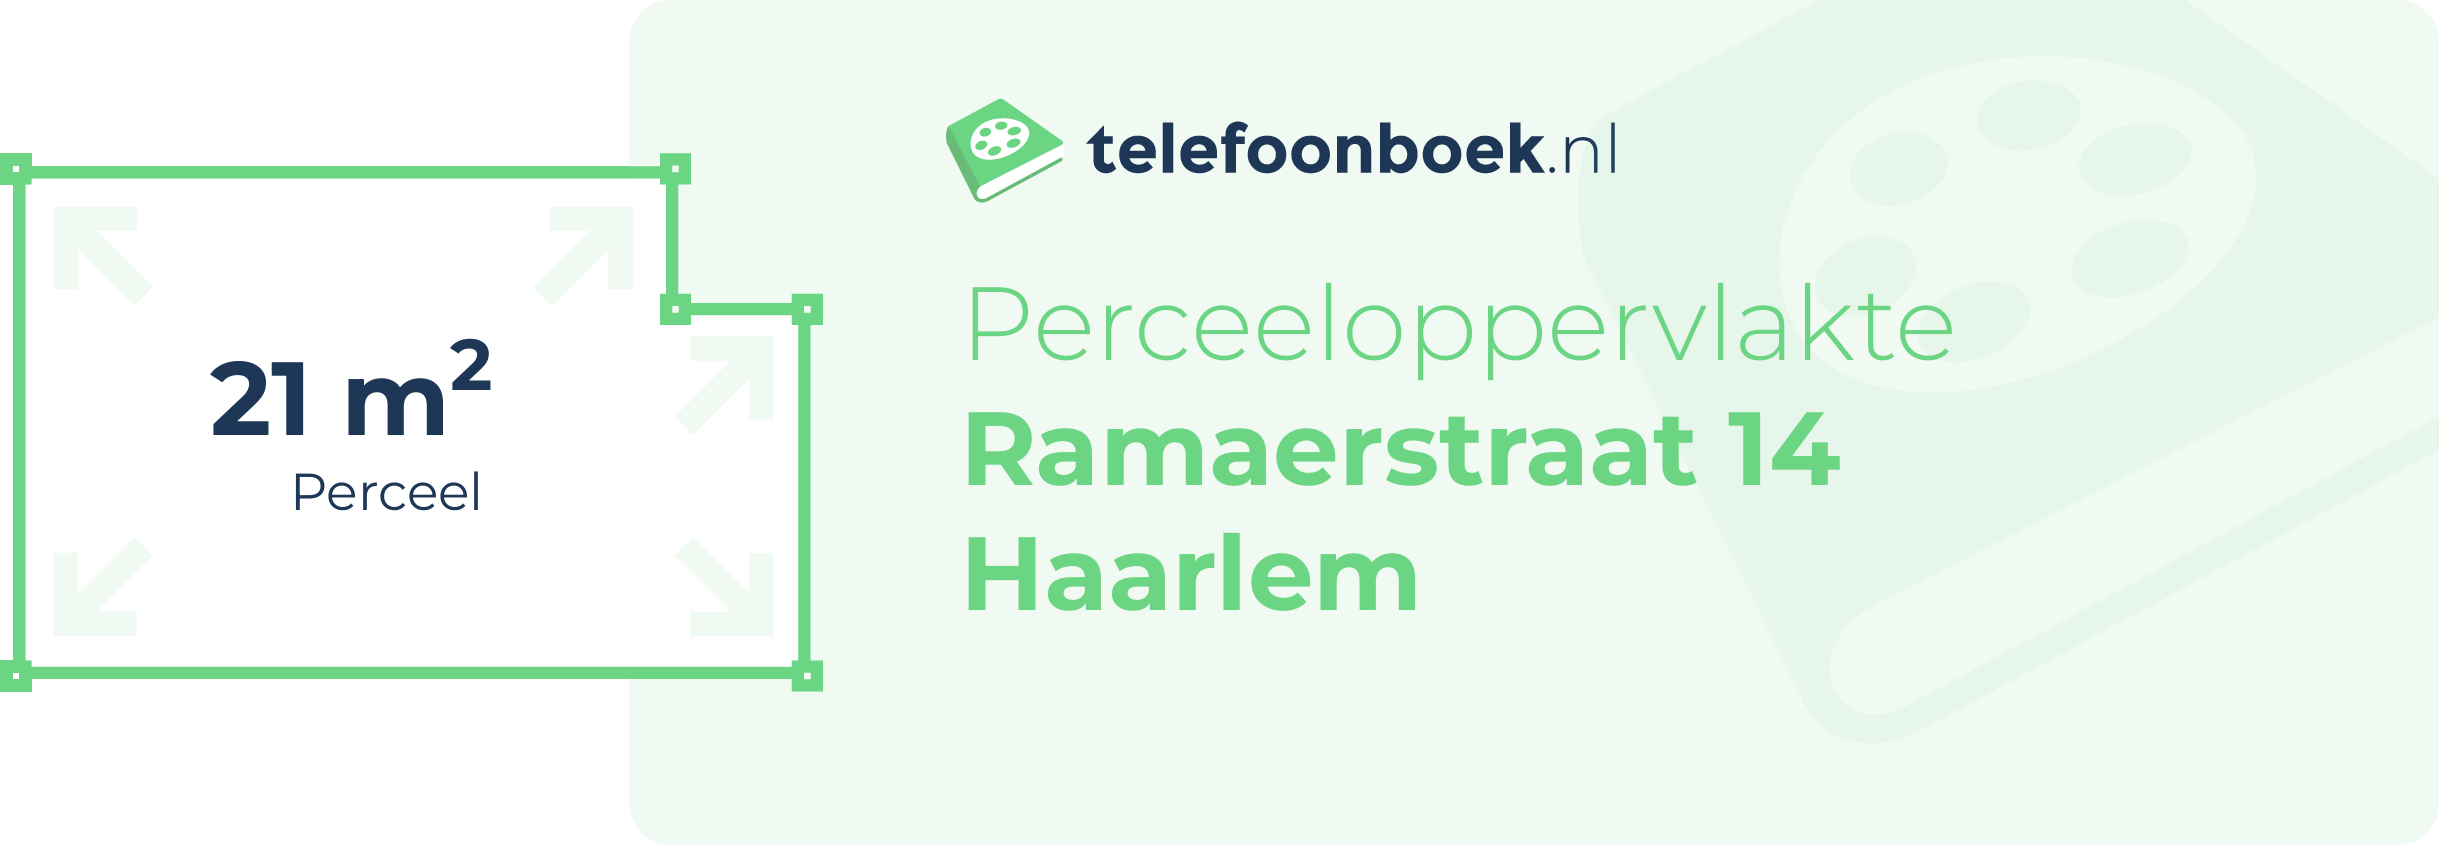 Perceeloppervlakte Ramaerstraat 14 Haarlem